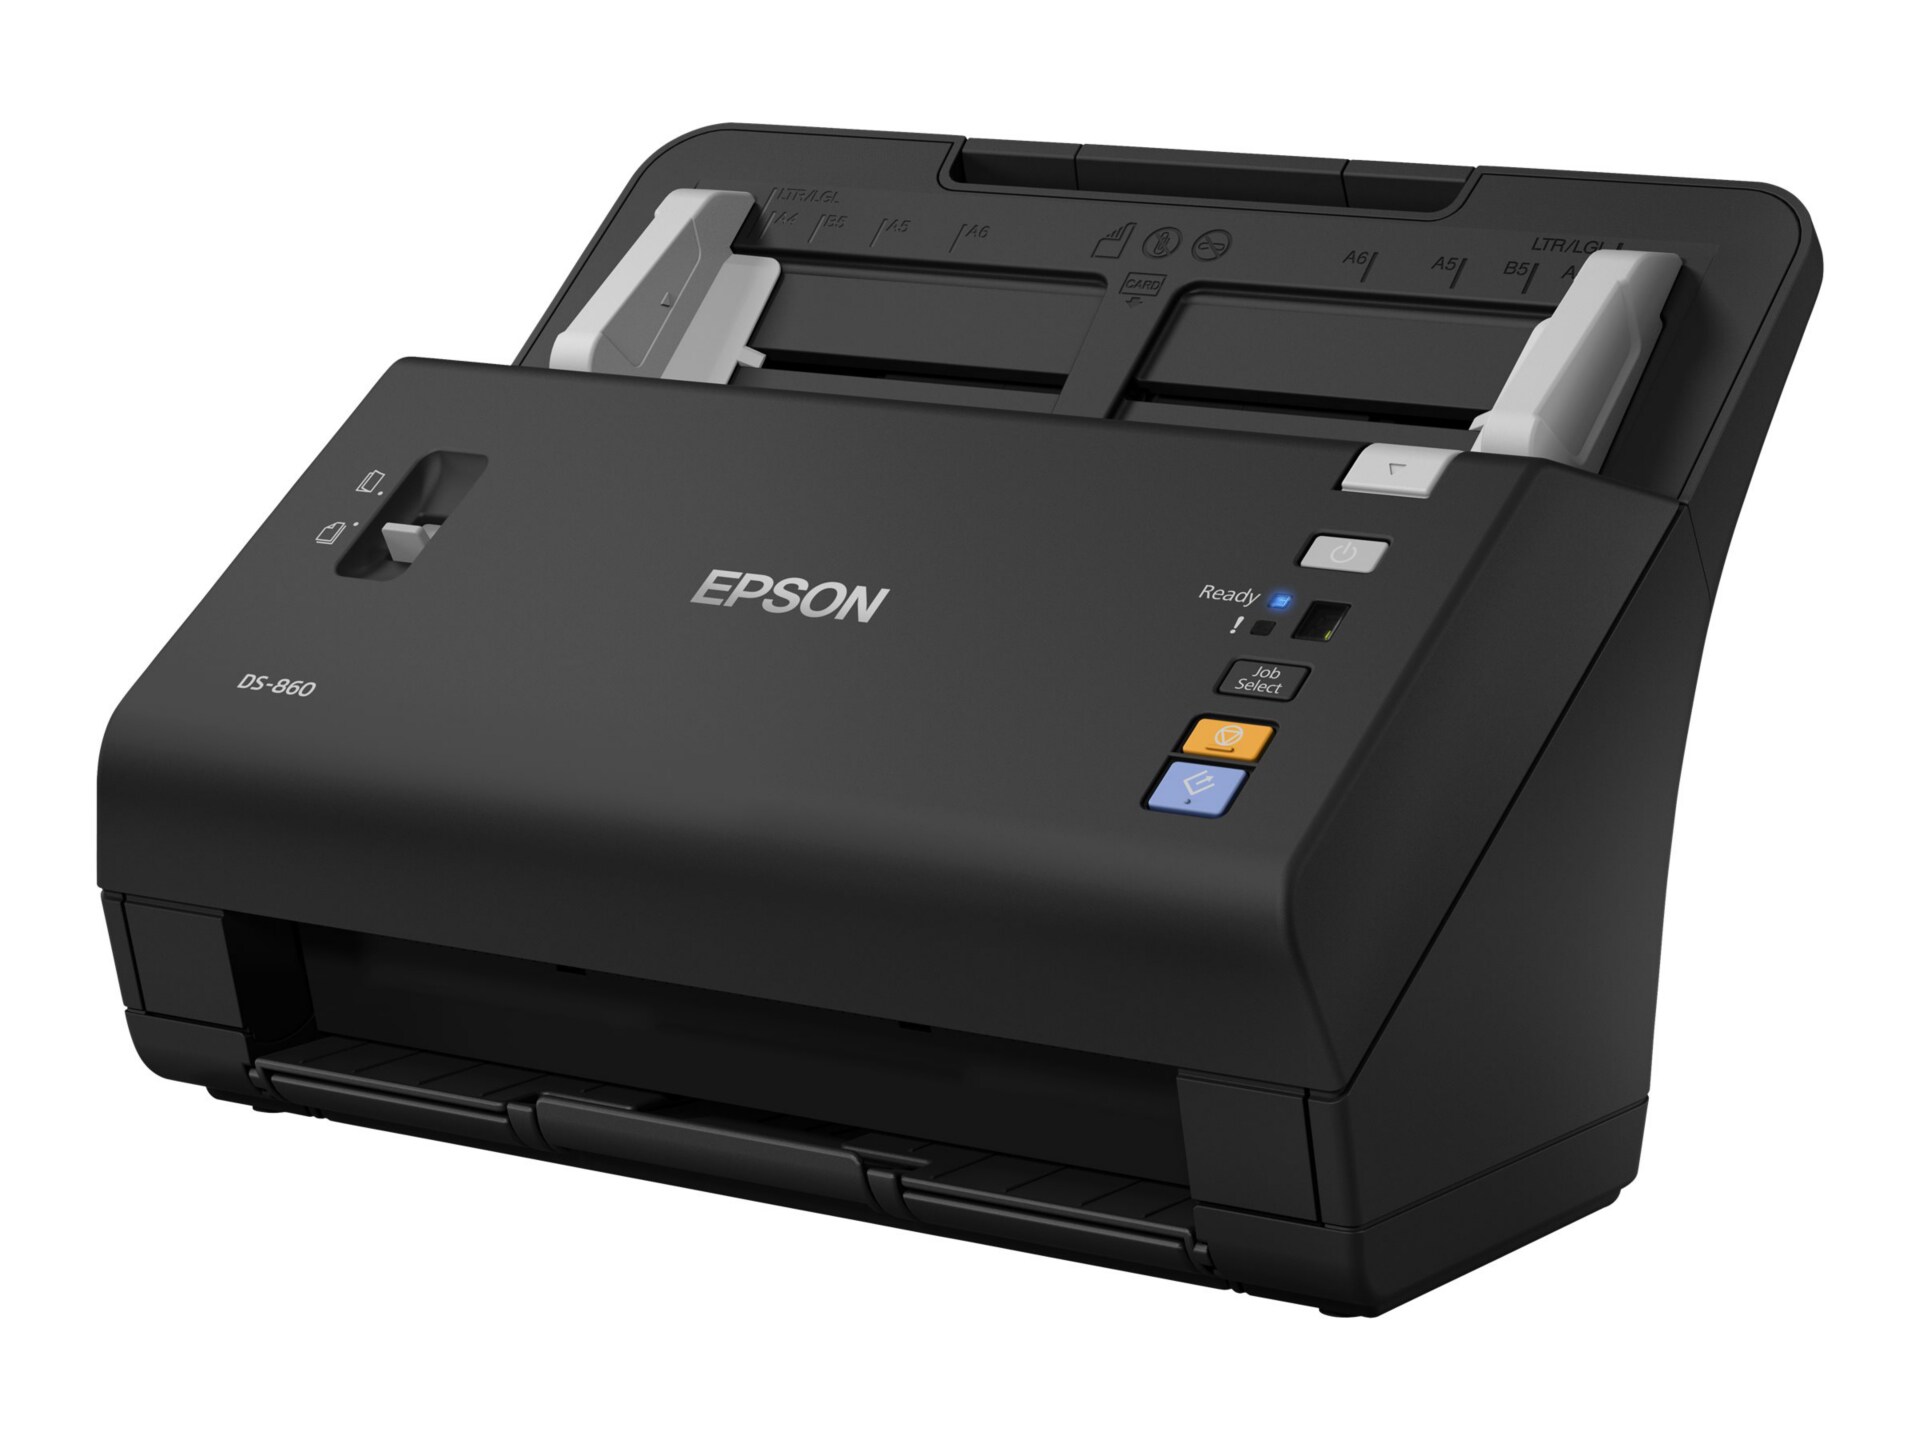 Epson WorkForce DS-860 - document scanner - desktop - USB 2.0